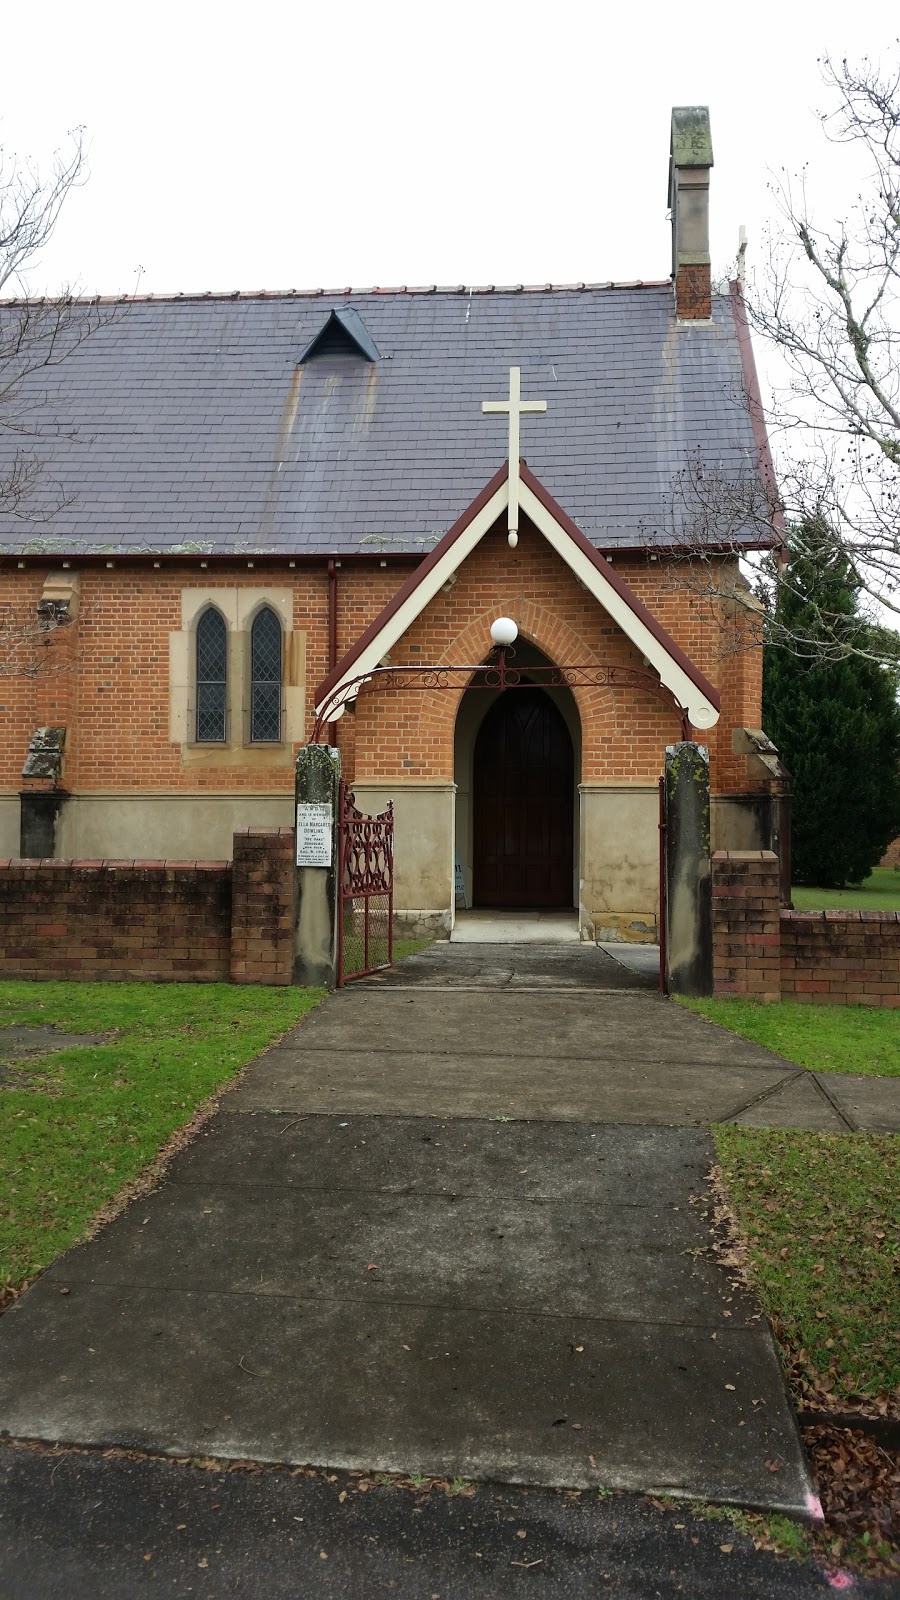 St Andrews Presbyterian Church & Dungog Markets | church | 60 Dowling St, Dungog NSW 2420, Australia | 0249921821 OR +61 2 4992 1821